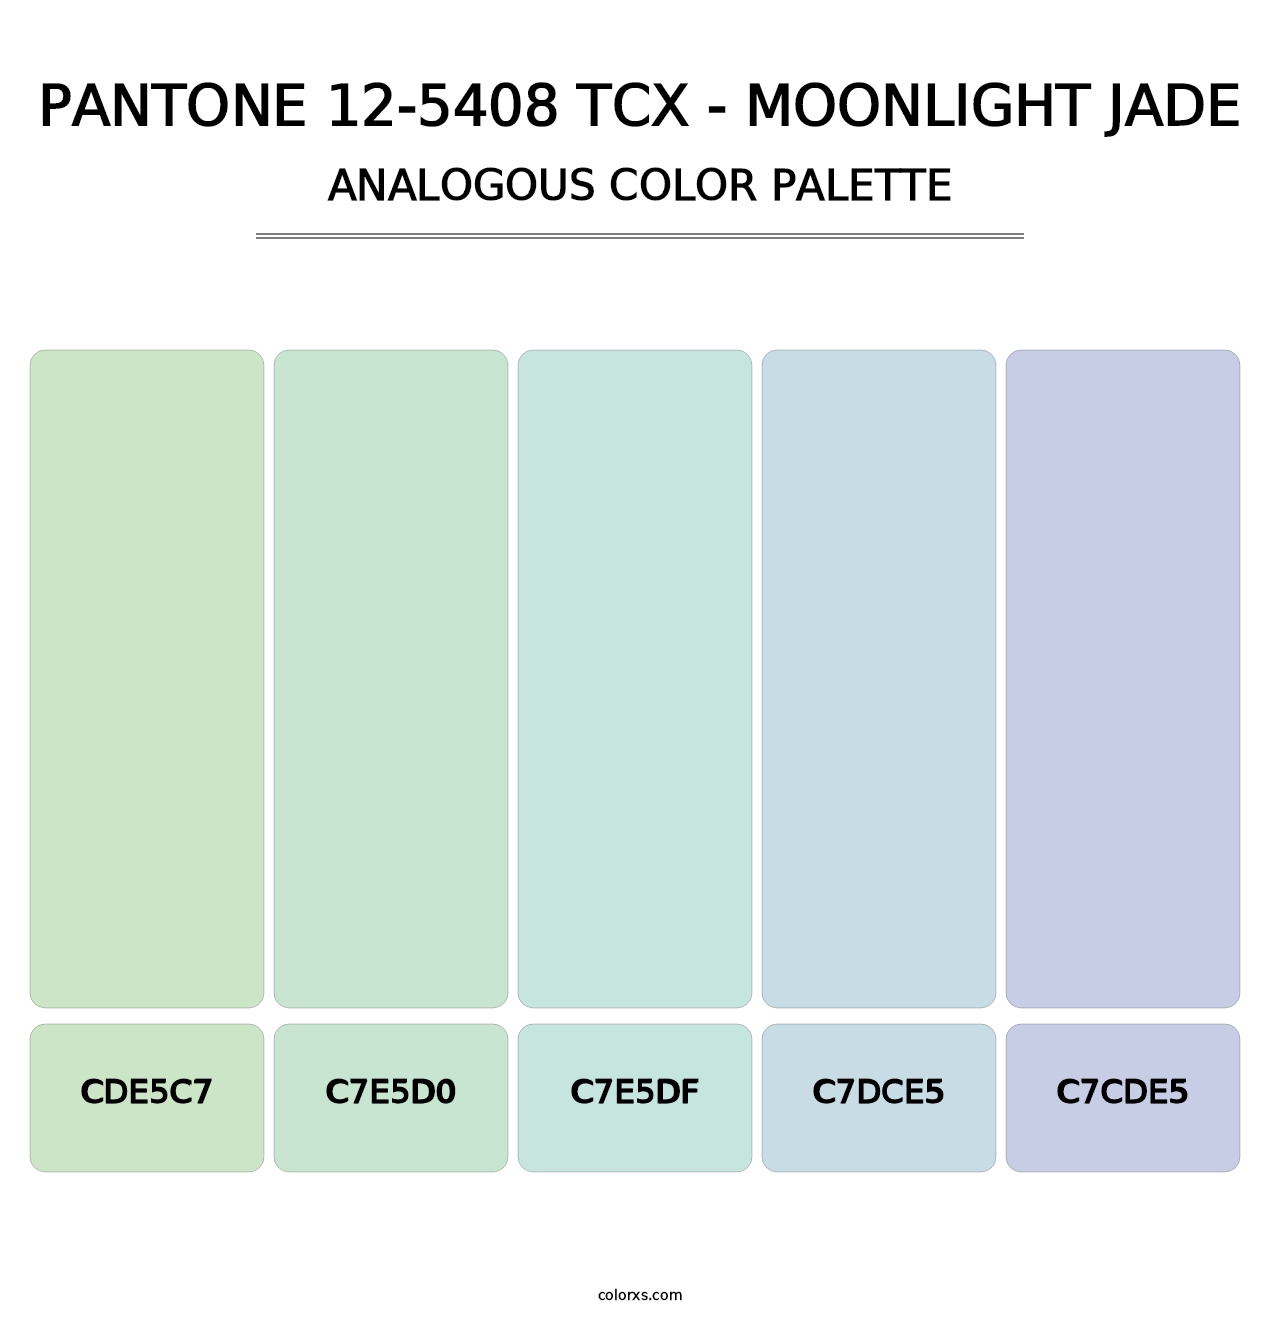 PANTONE 12-5408 TCX - Moonlight Jade - Analogous Color Palette